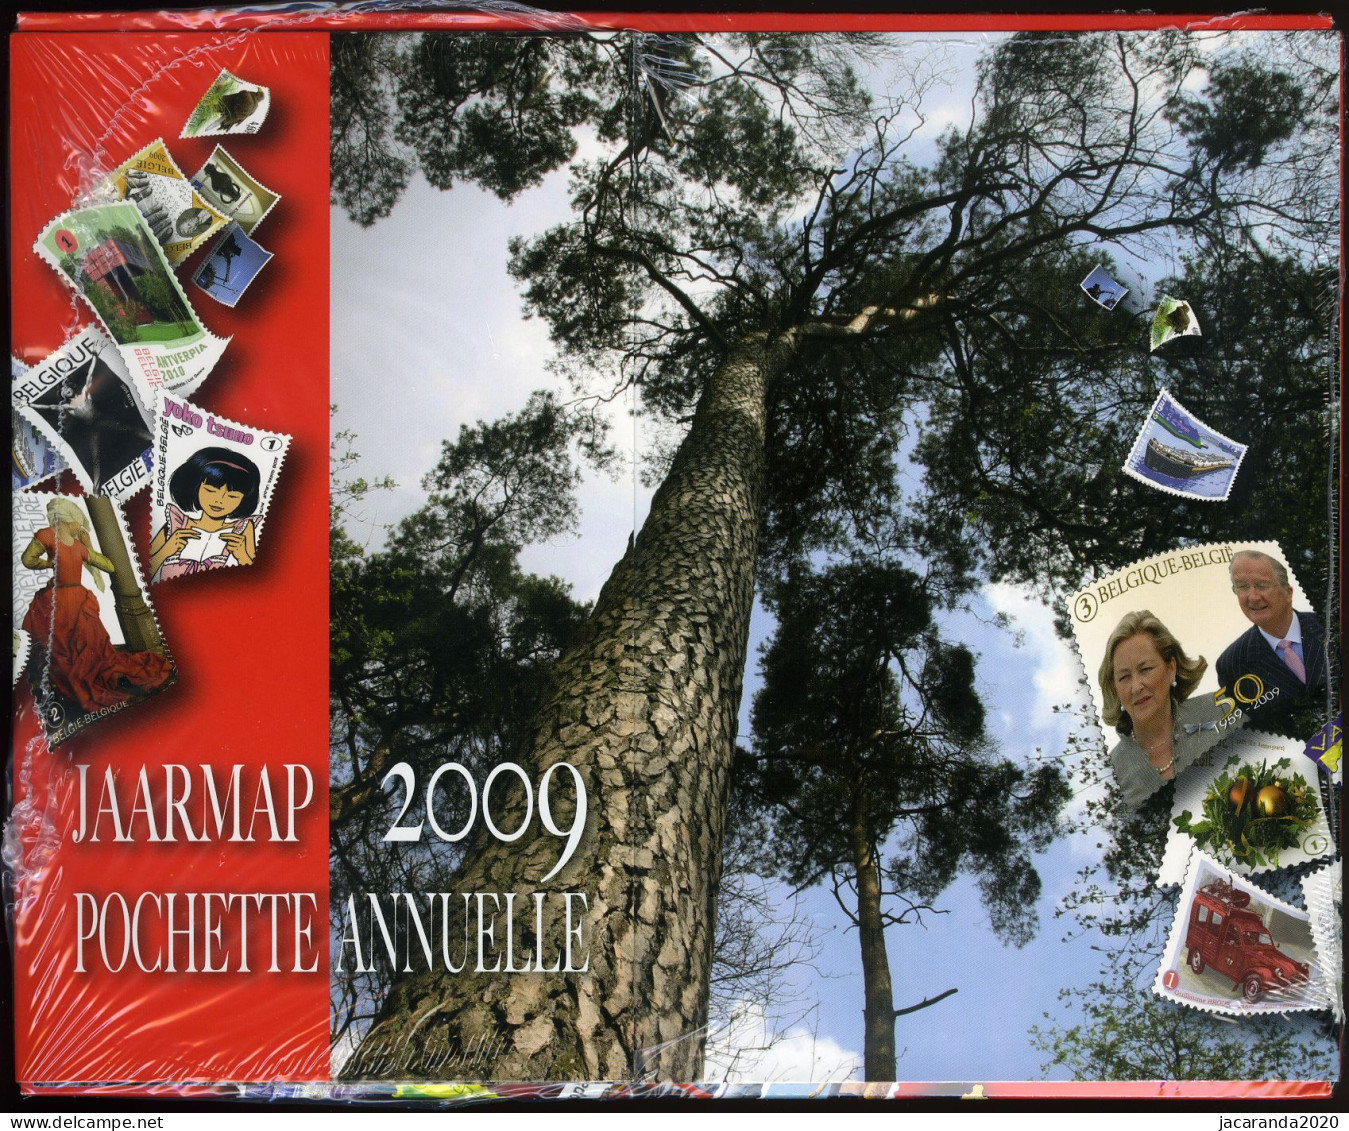 België 2009 - Jaarmap - Pochette Annuelle - Met Zwart-wit Velletje Van Europa - Originele Verpakking - Scellé - Sealed - Volledige Jaargang